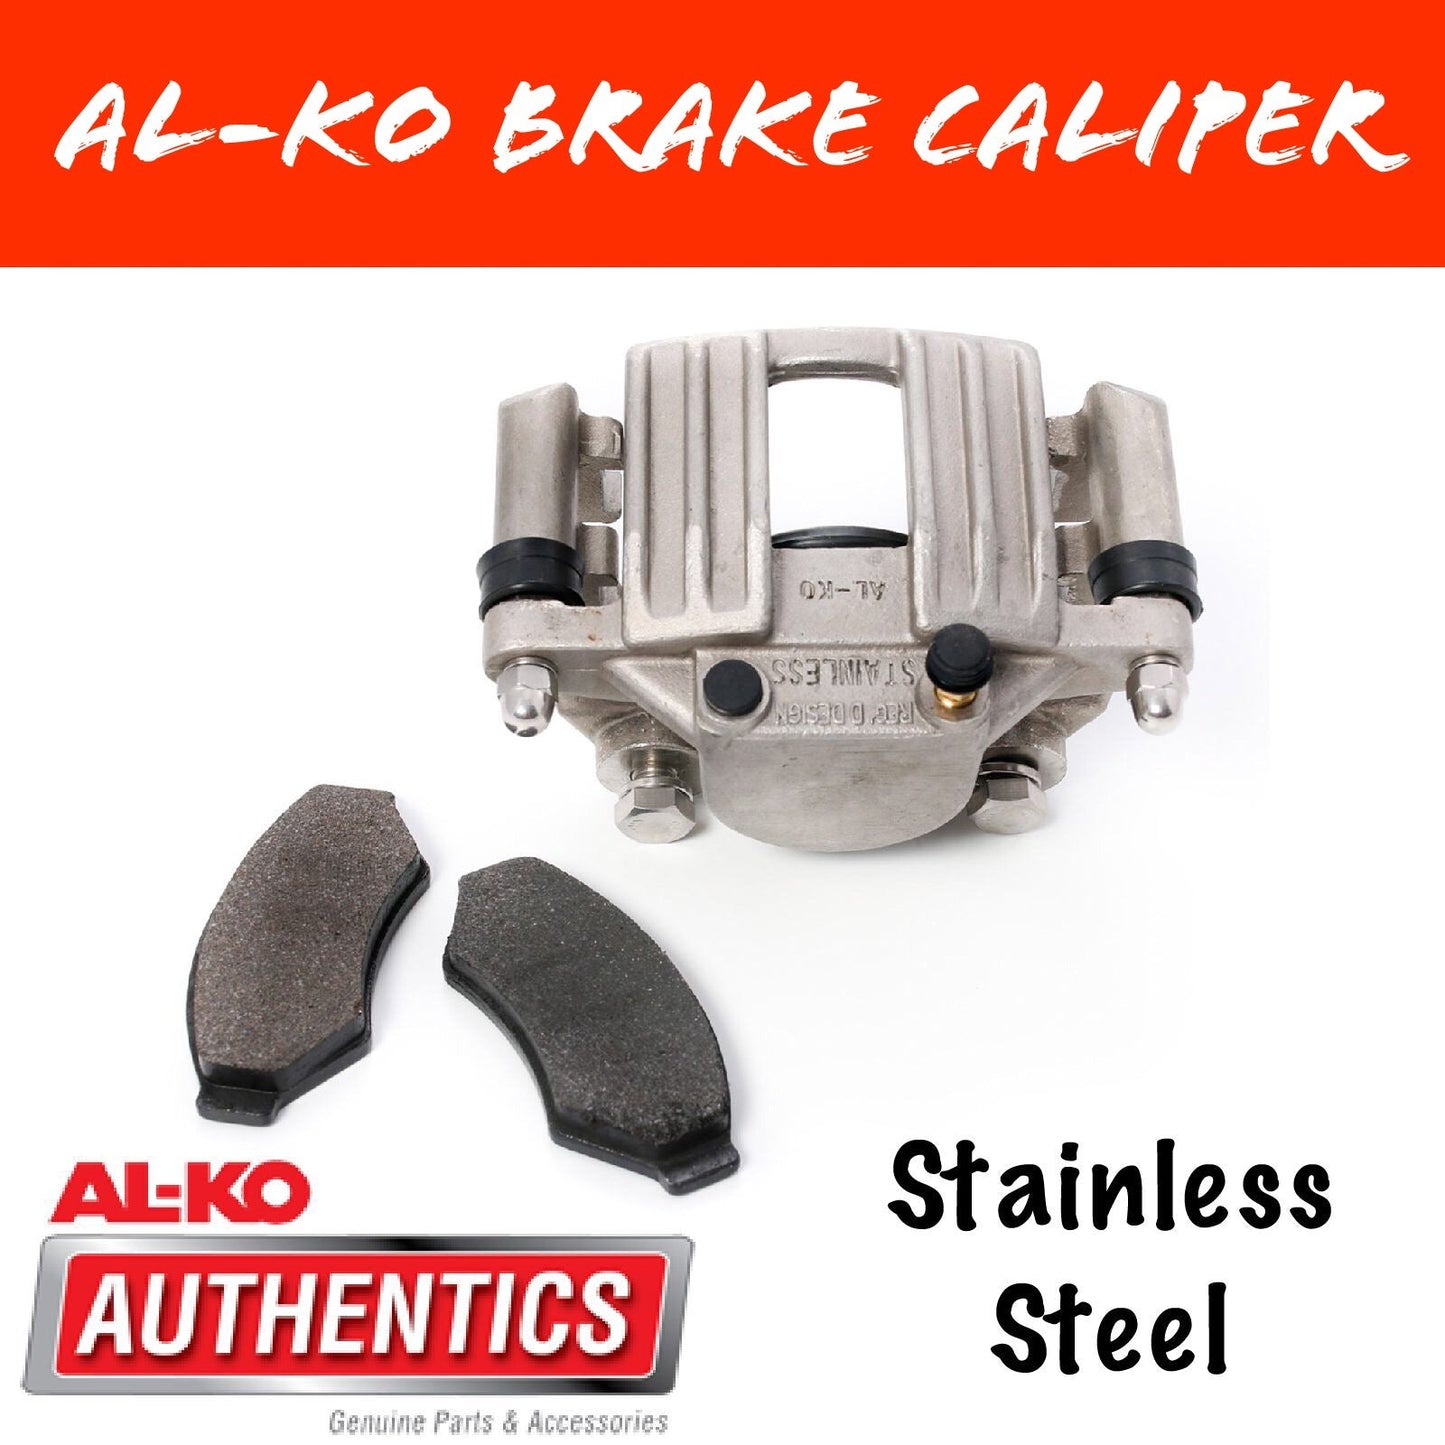 AL-KO STAINLESS STEEL Hydraulic Brake Calipers NEW S/S PISTON